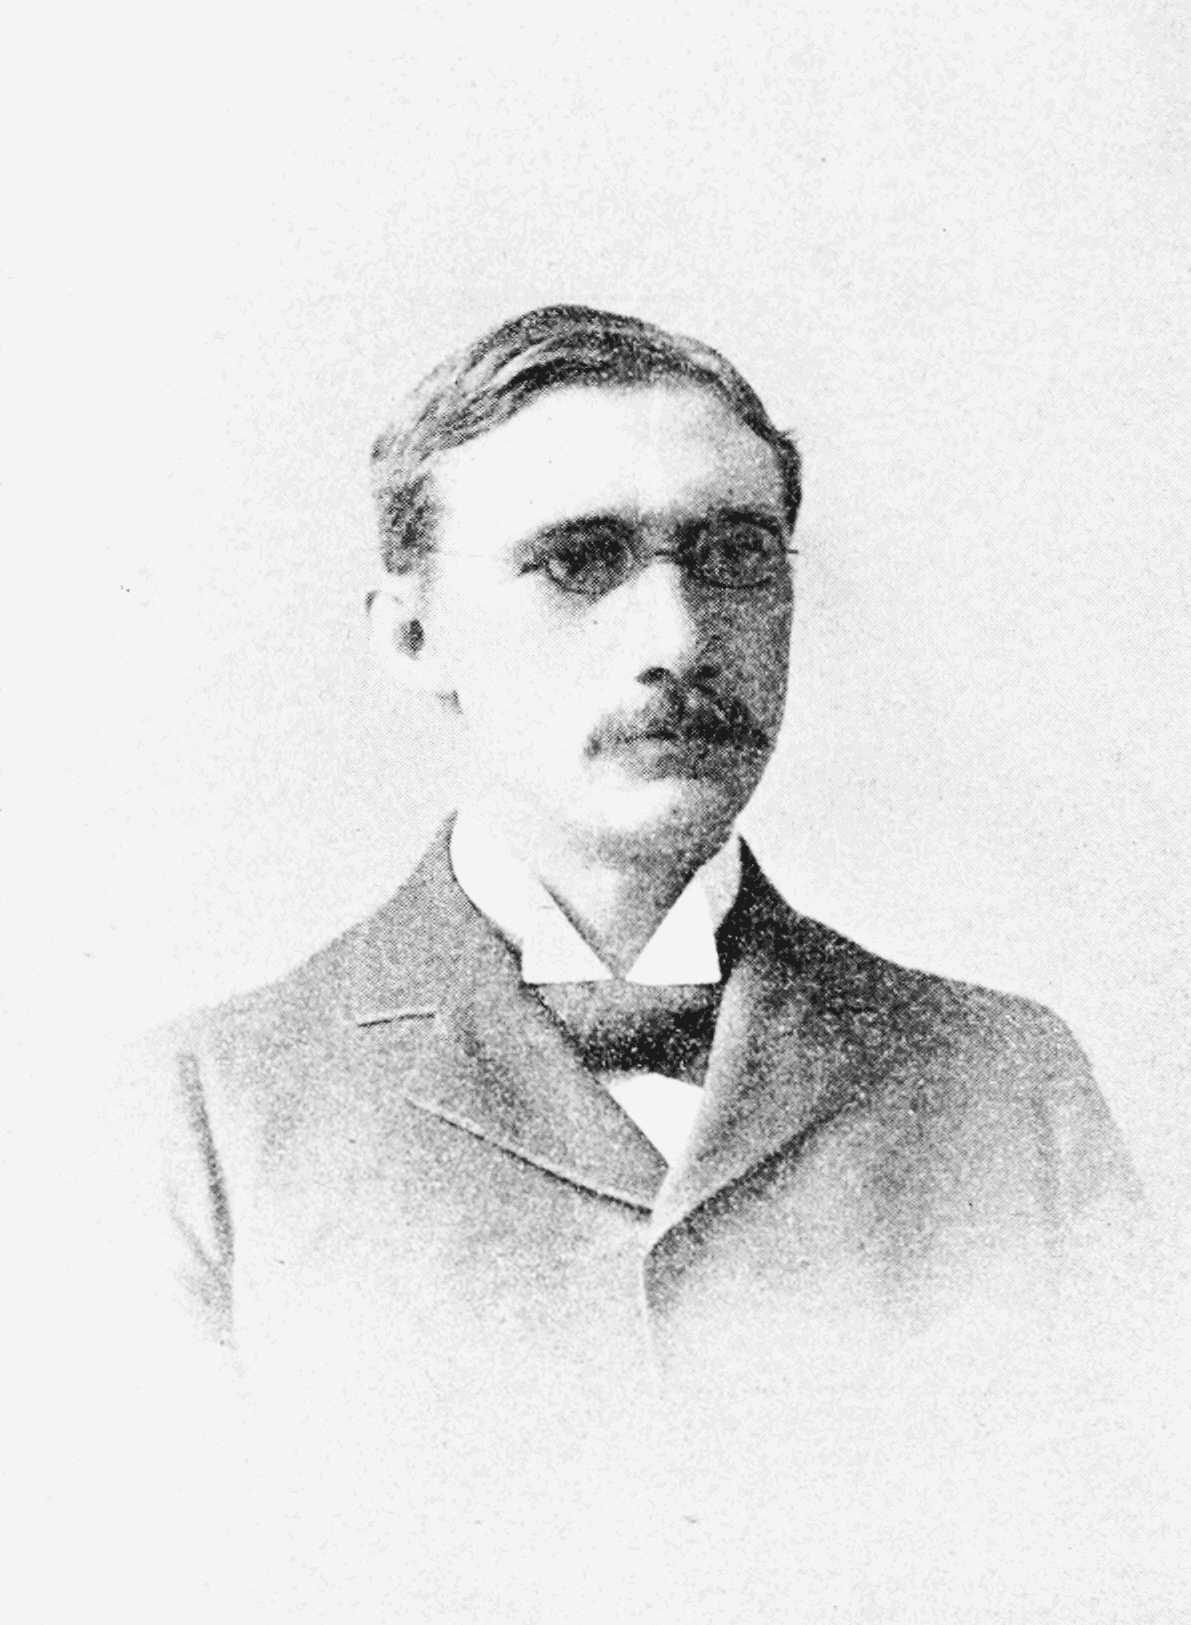 Magie, William Francis, Class of 1879